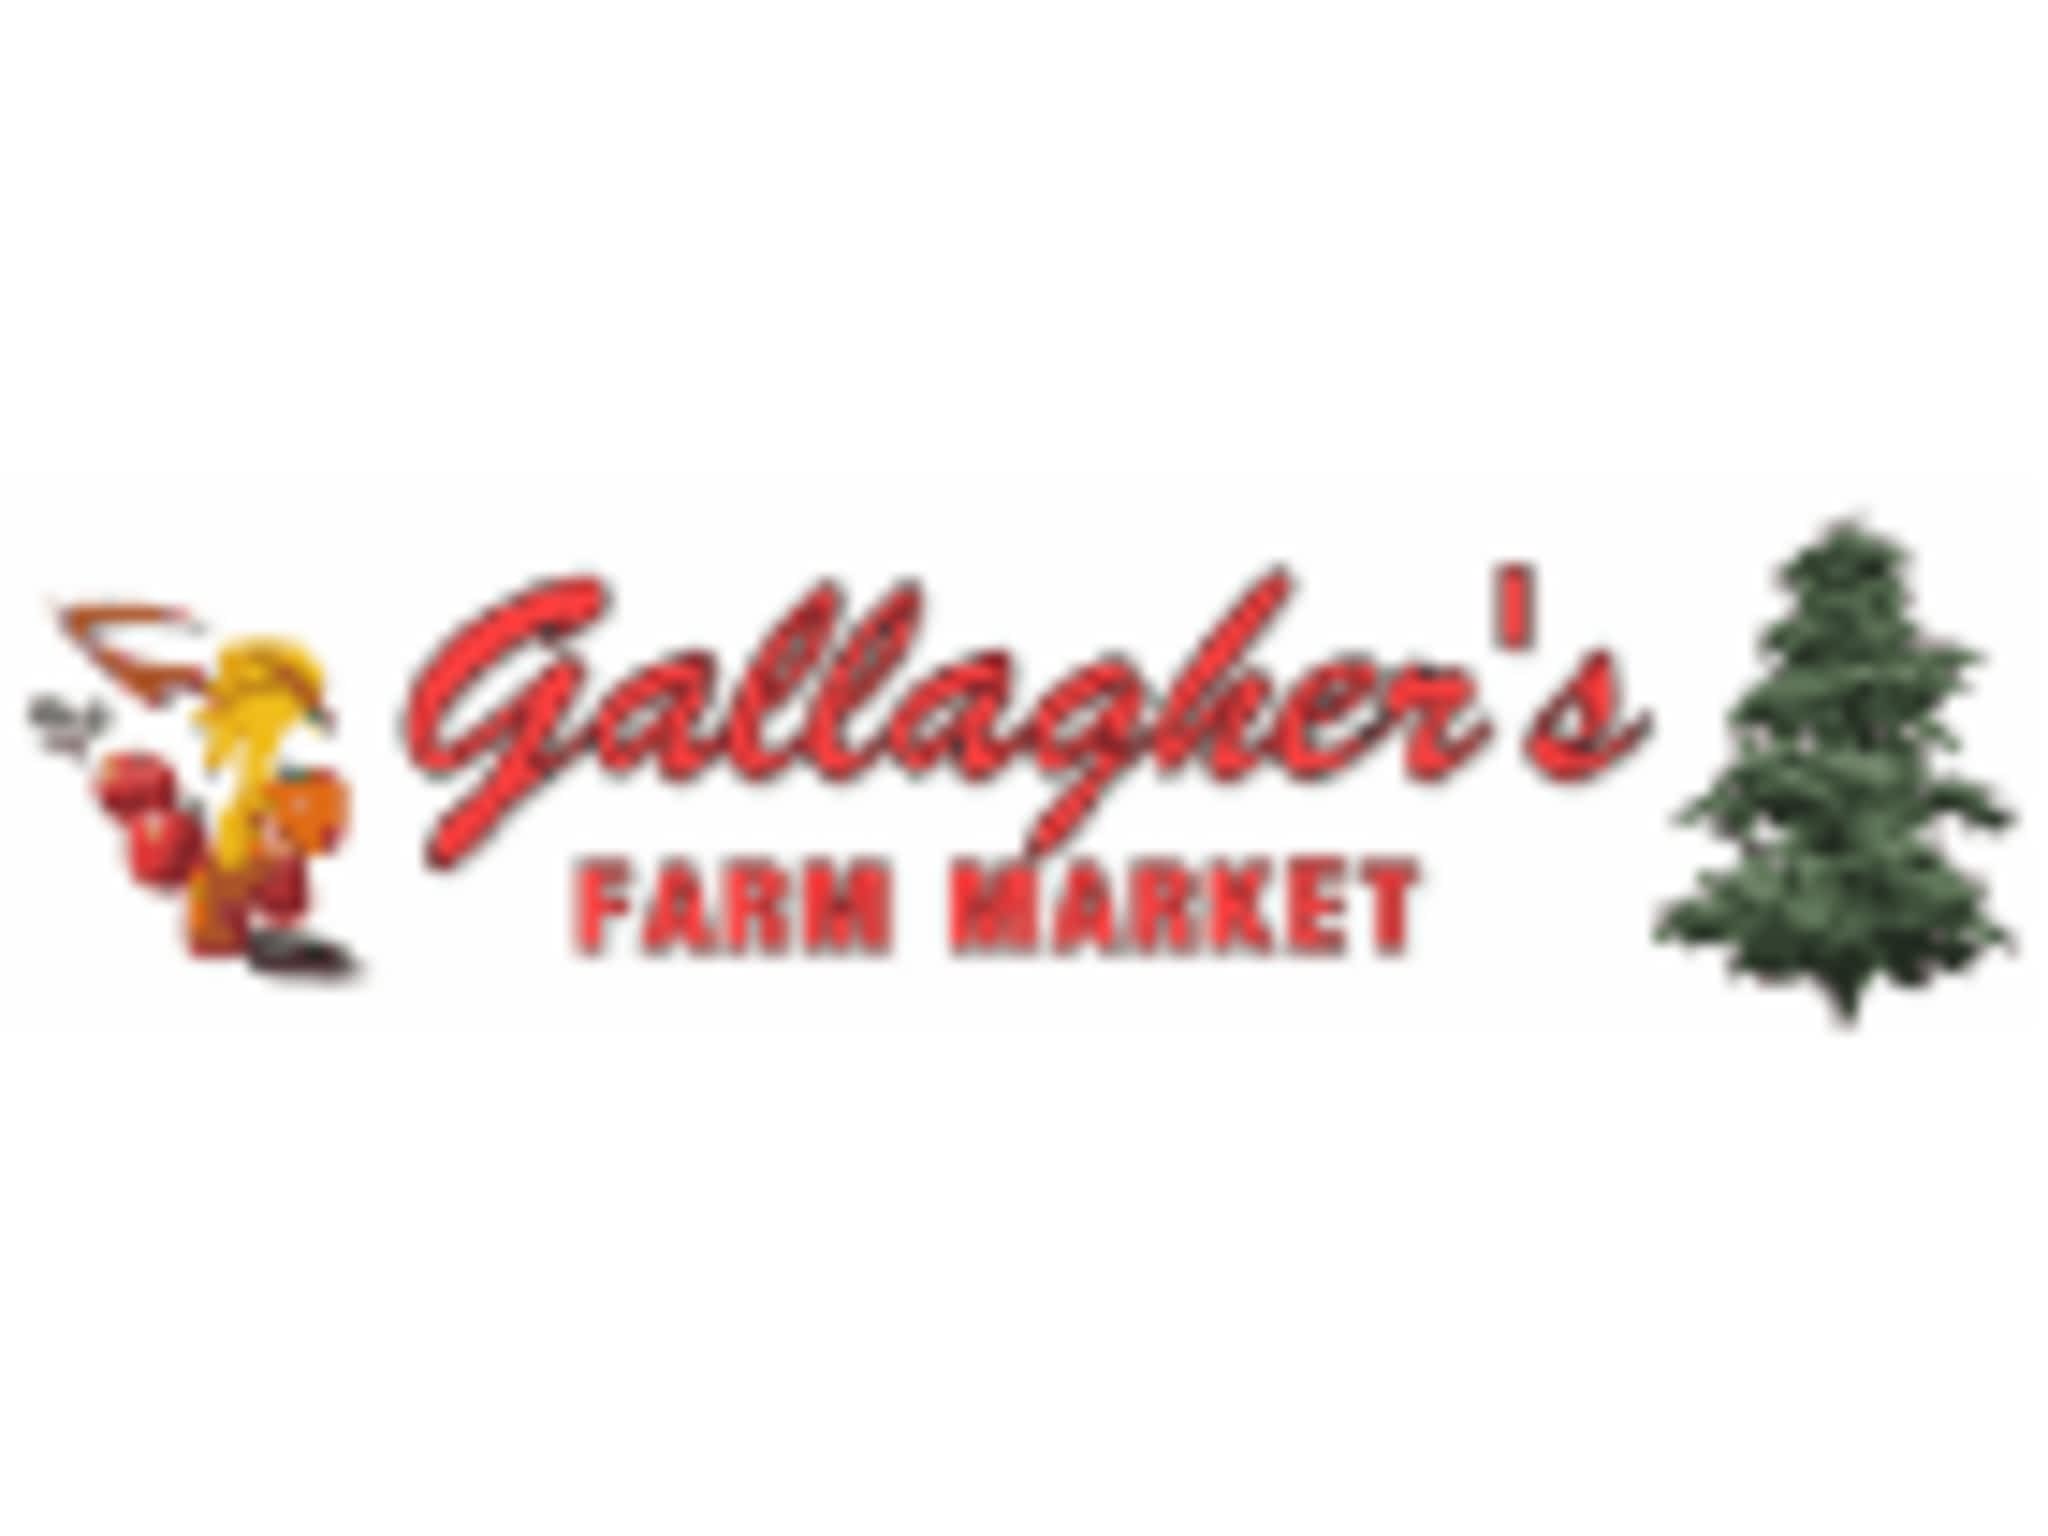 photo Gallagher's Farm Market